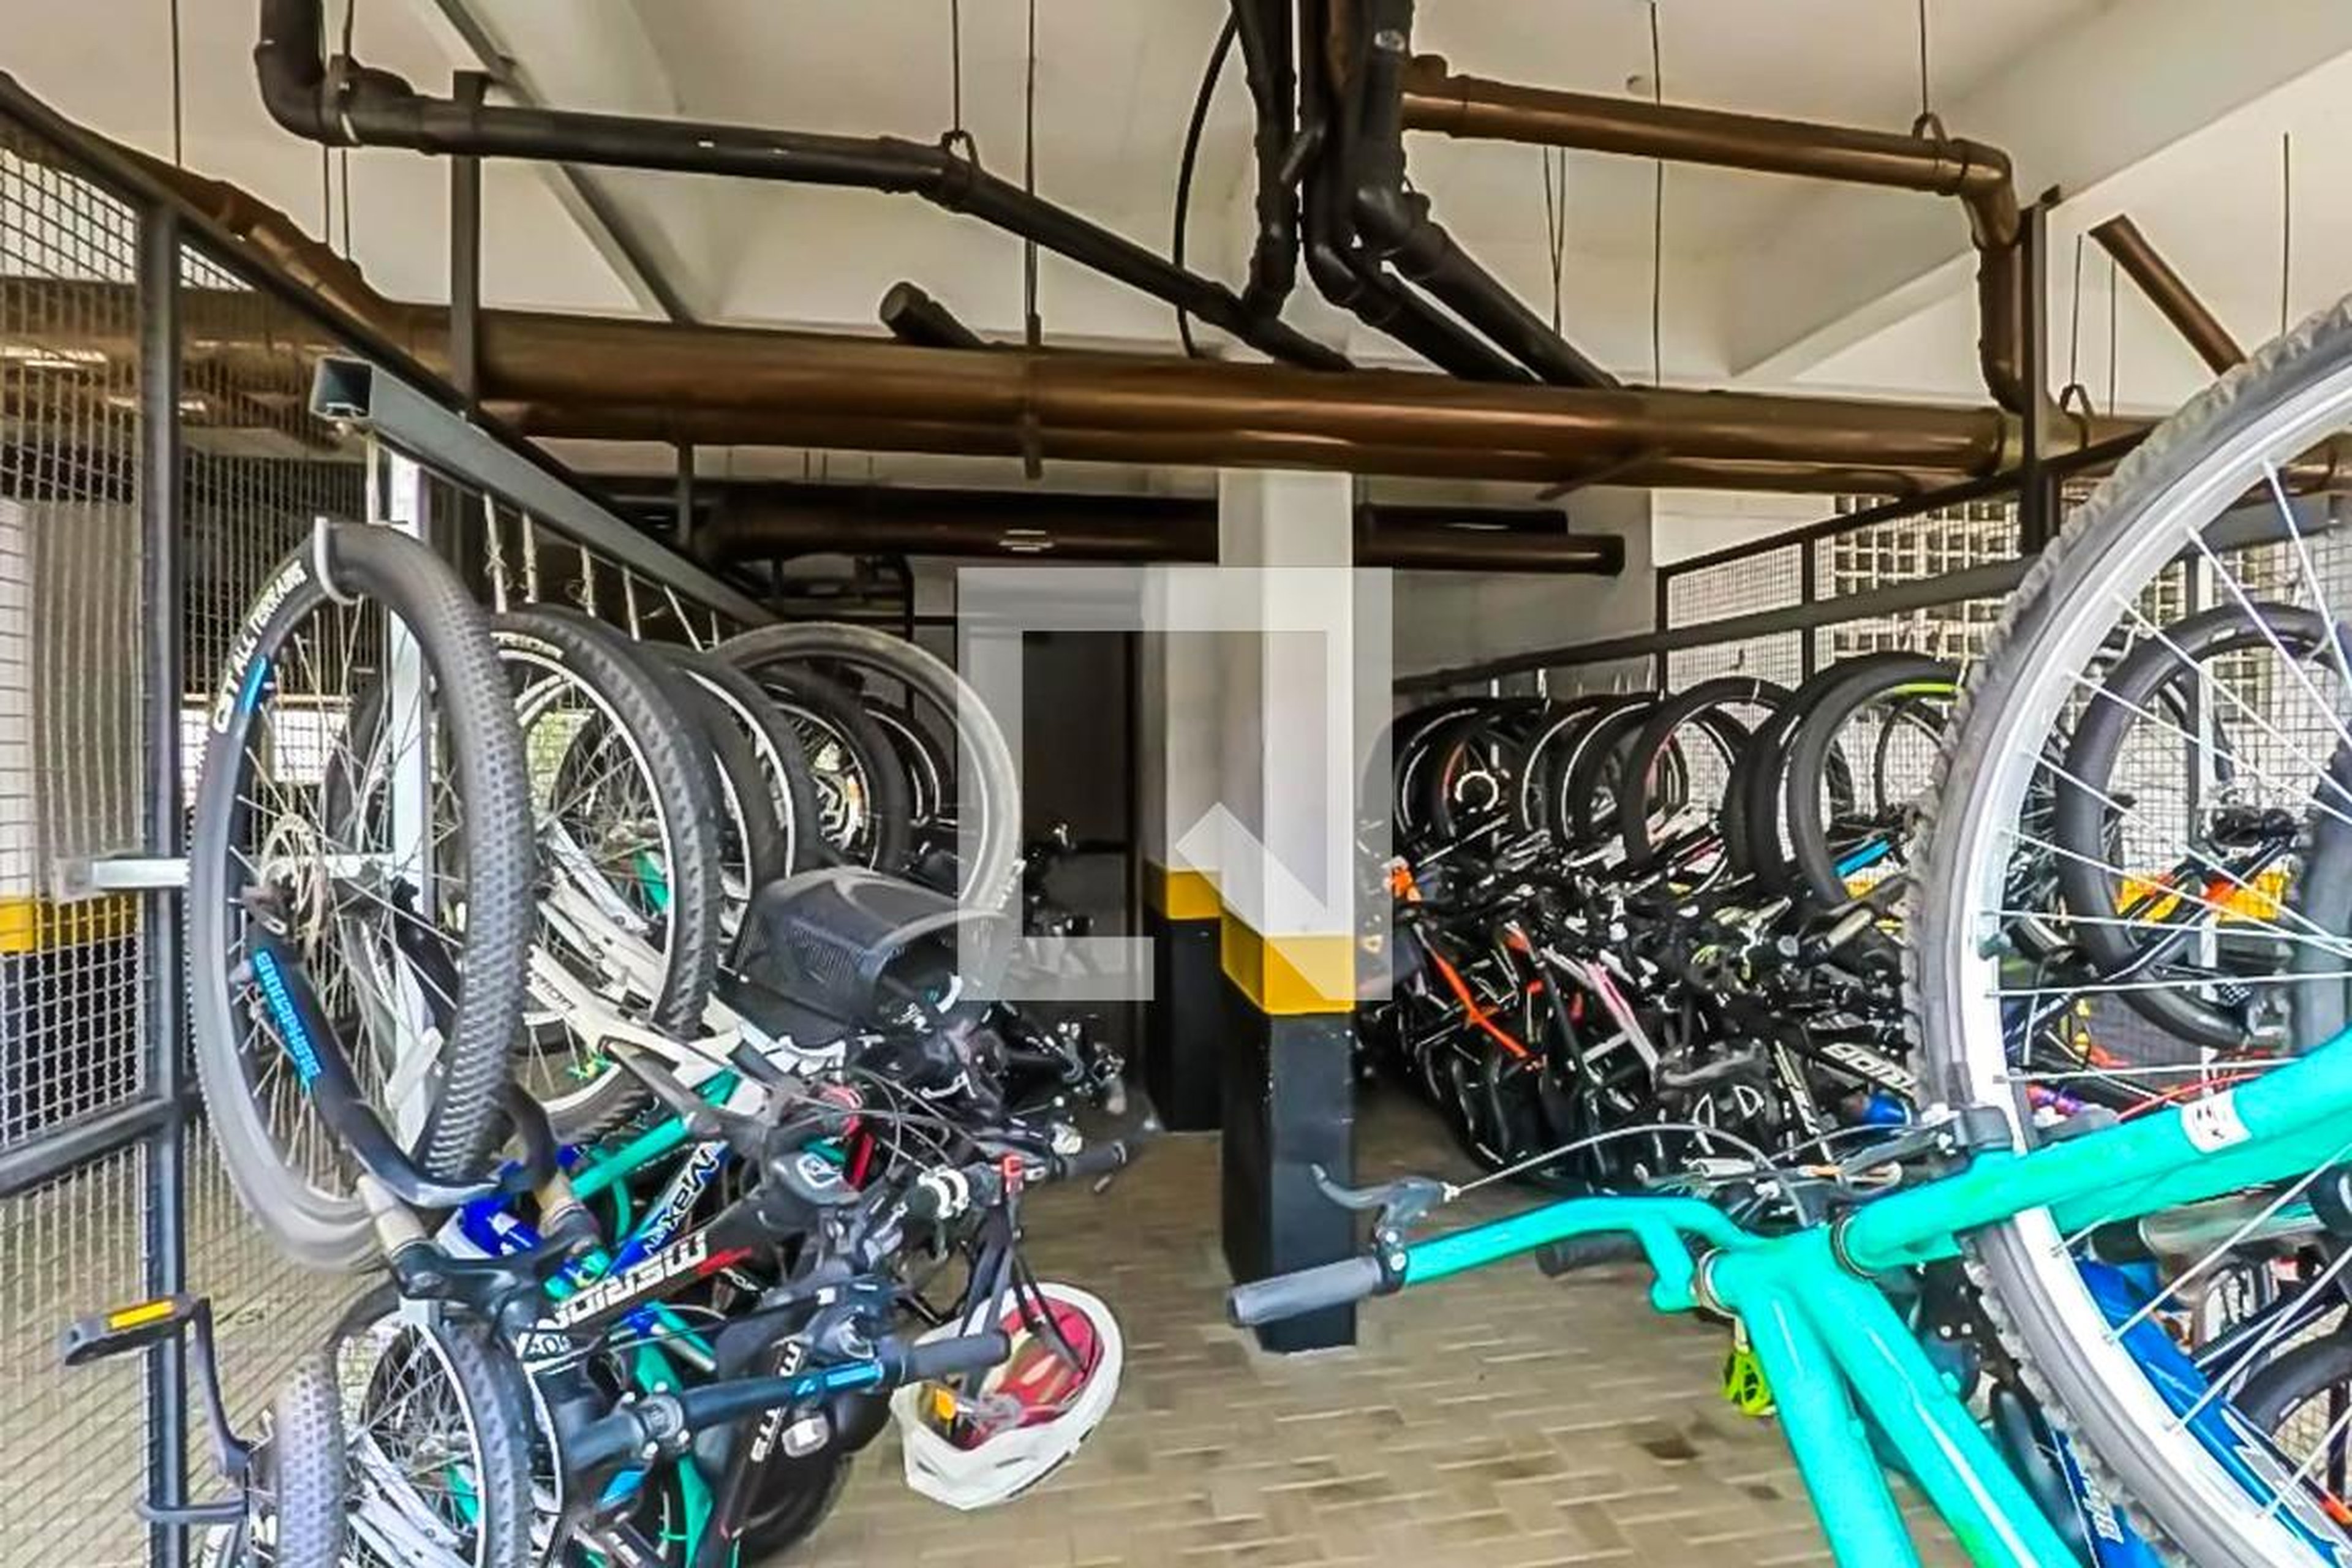 Bicicletario - New Residence Ipiranga